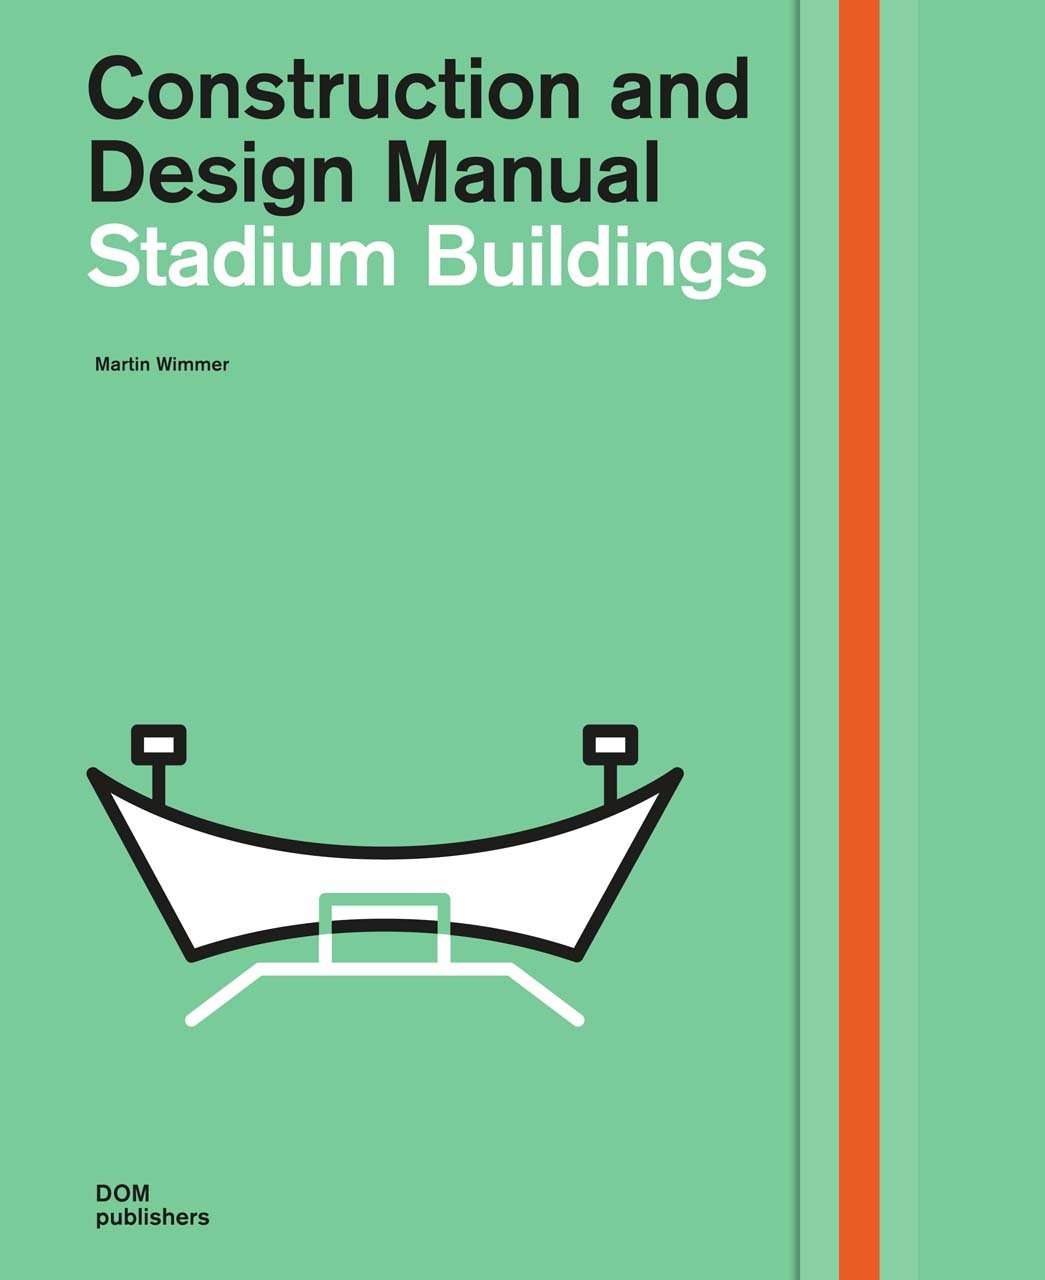 Construction and Design Manual: Stadium Buildings